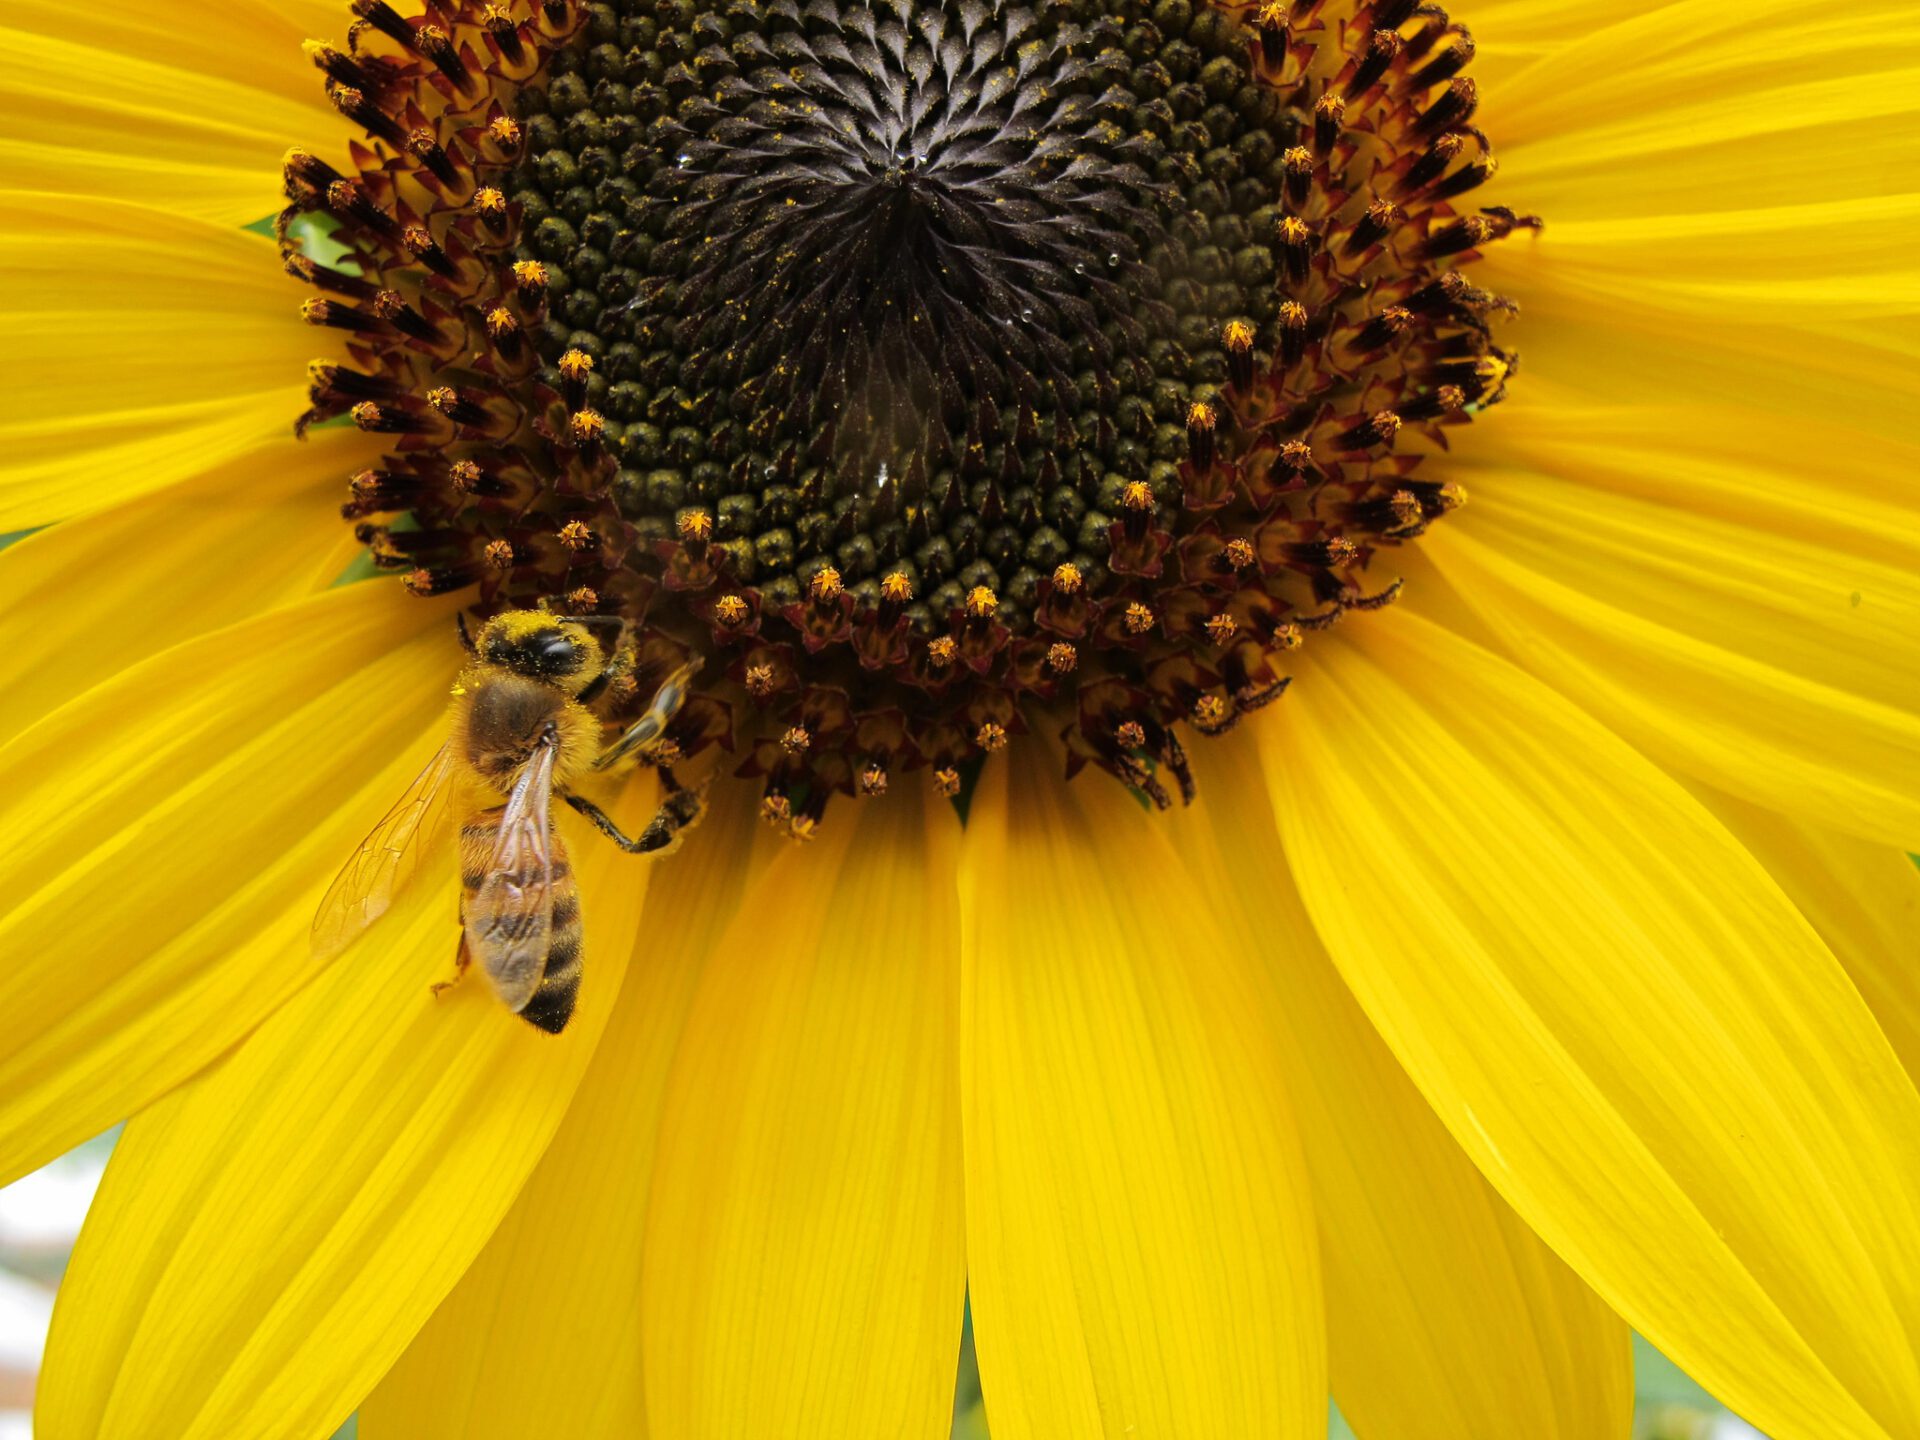 Honeybee on sunflower